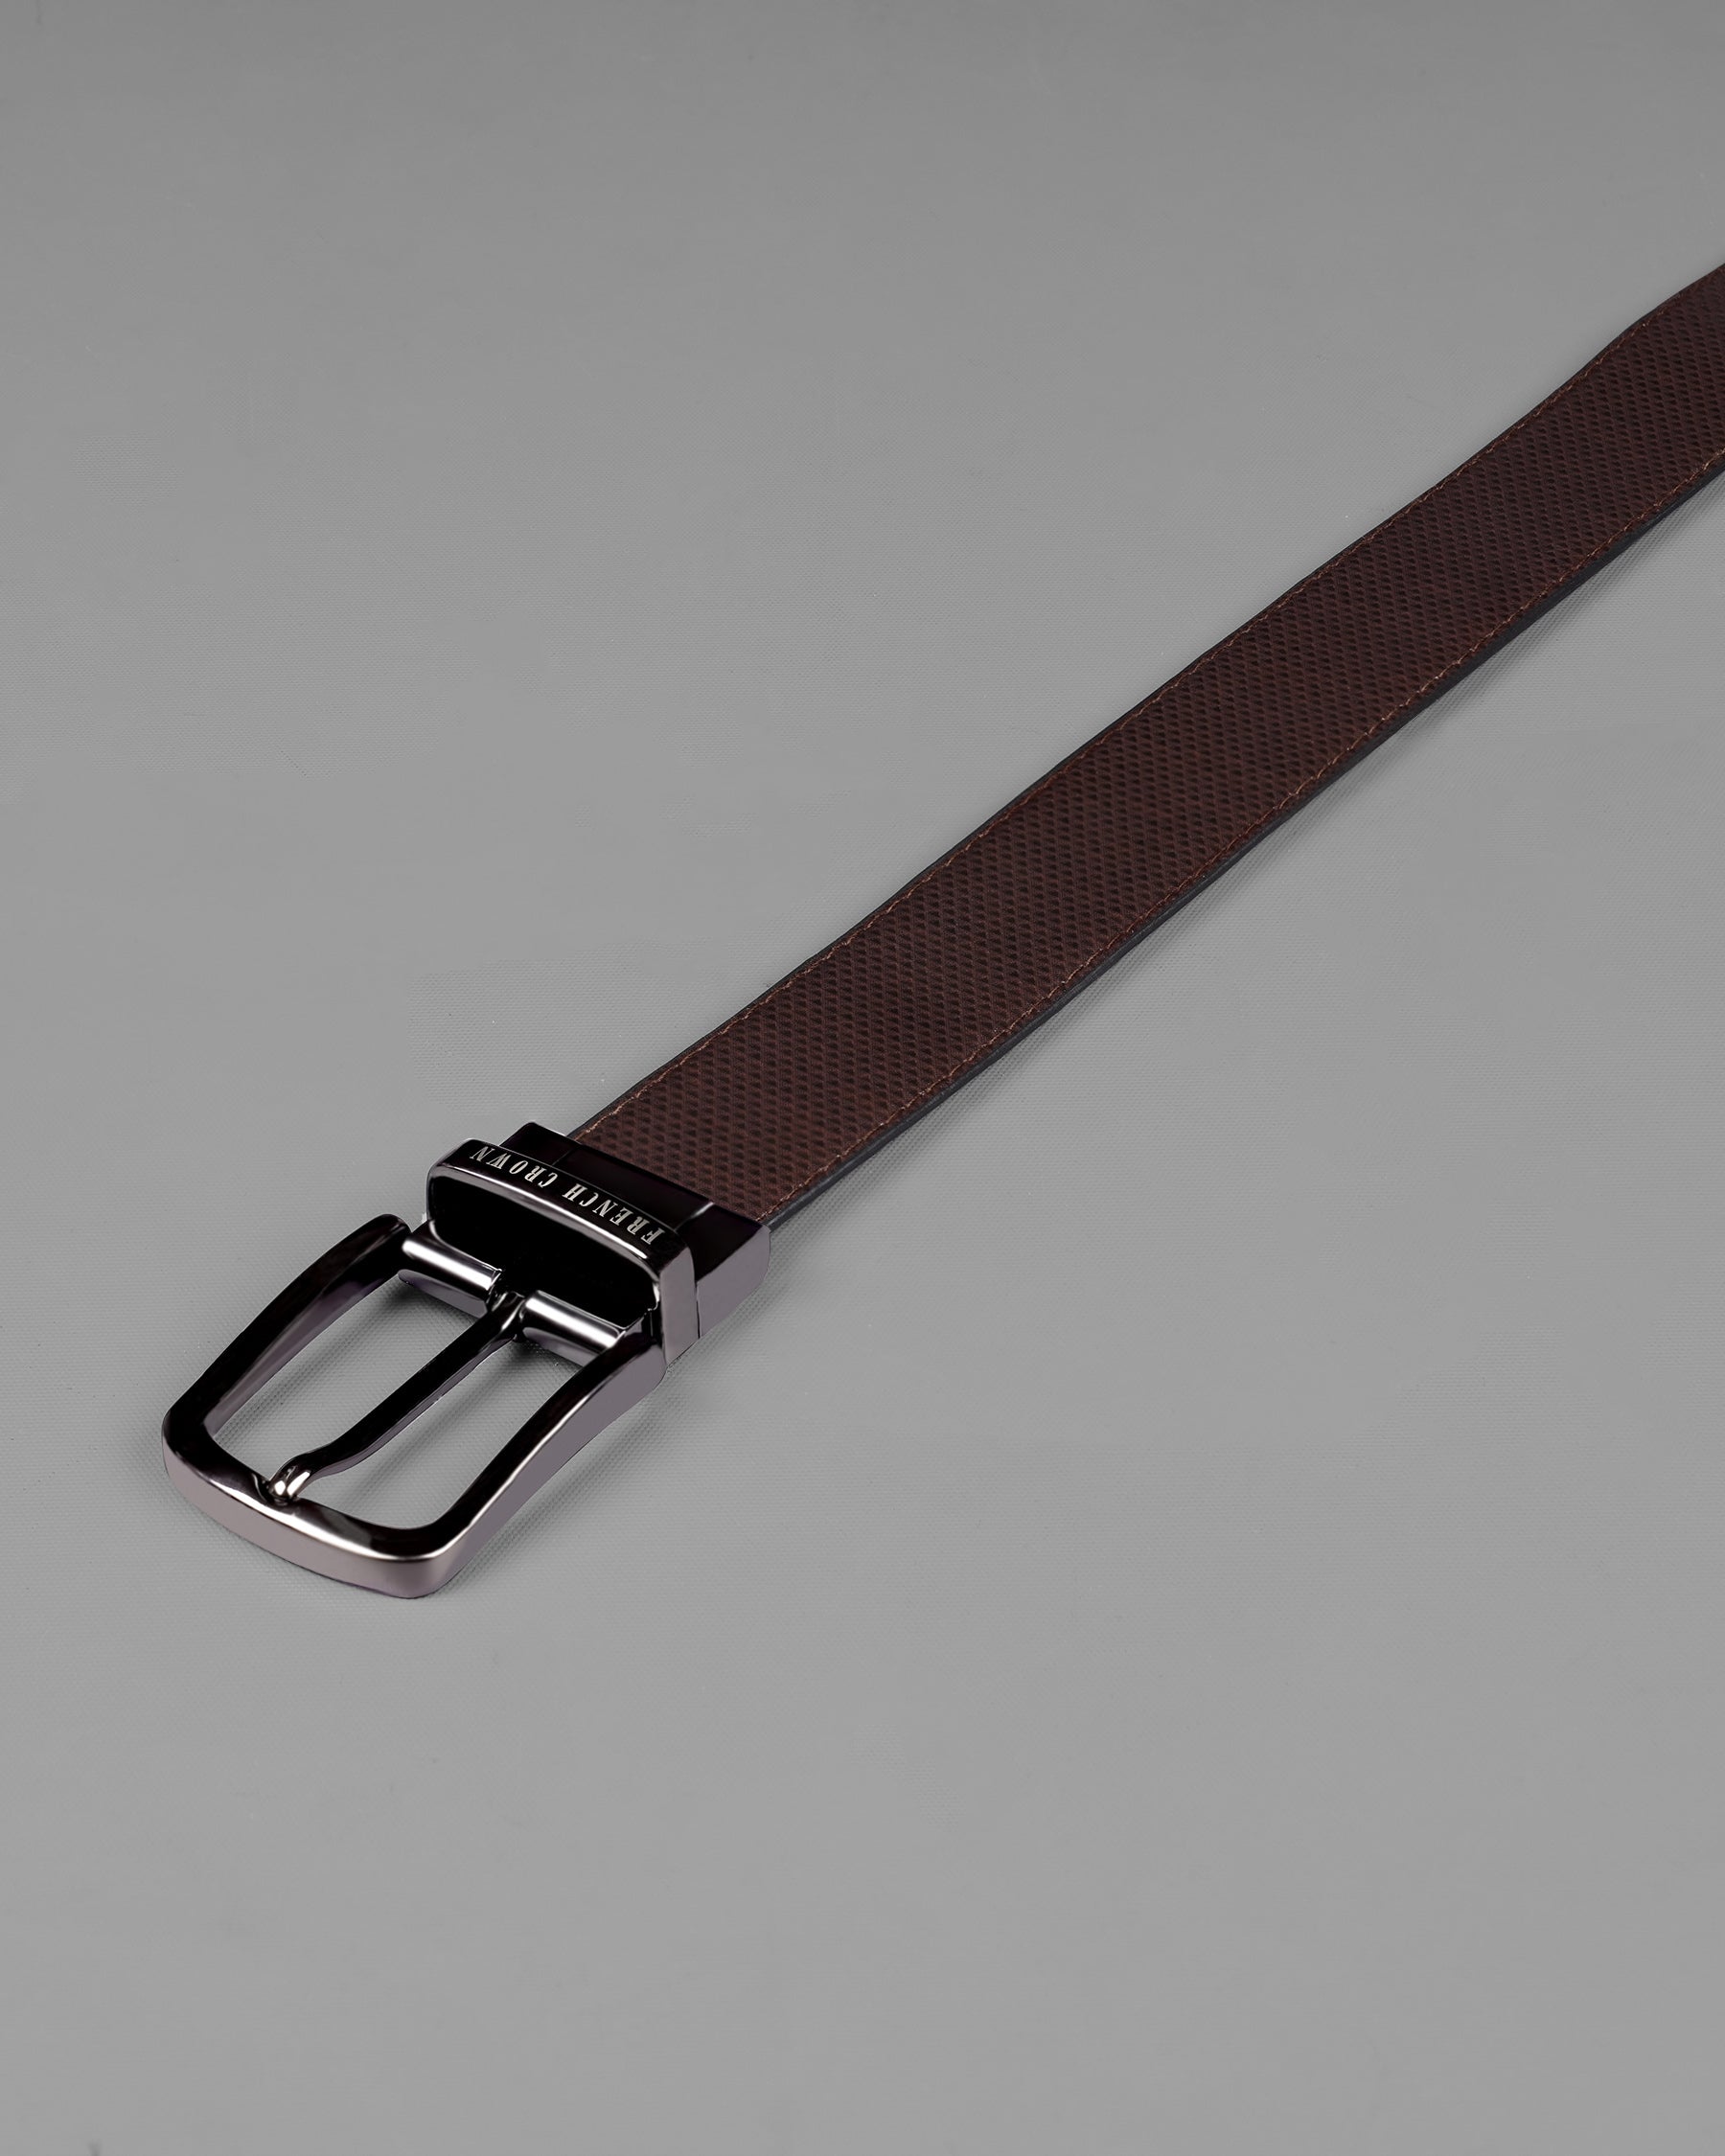 Metallic Black Buckle with Jade Black and Brown Leather Free Handcrafted Reversible Belt BT082-28, BT082-30, BT082-32, BT082-34, BT082-36, BT082-38